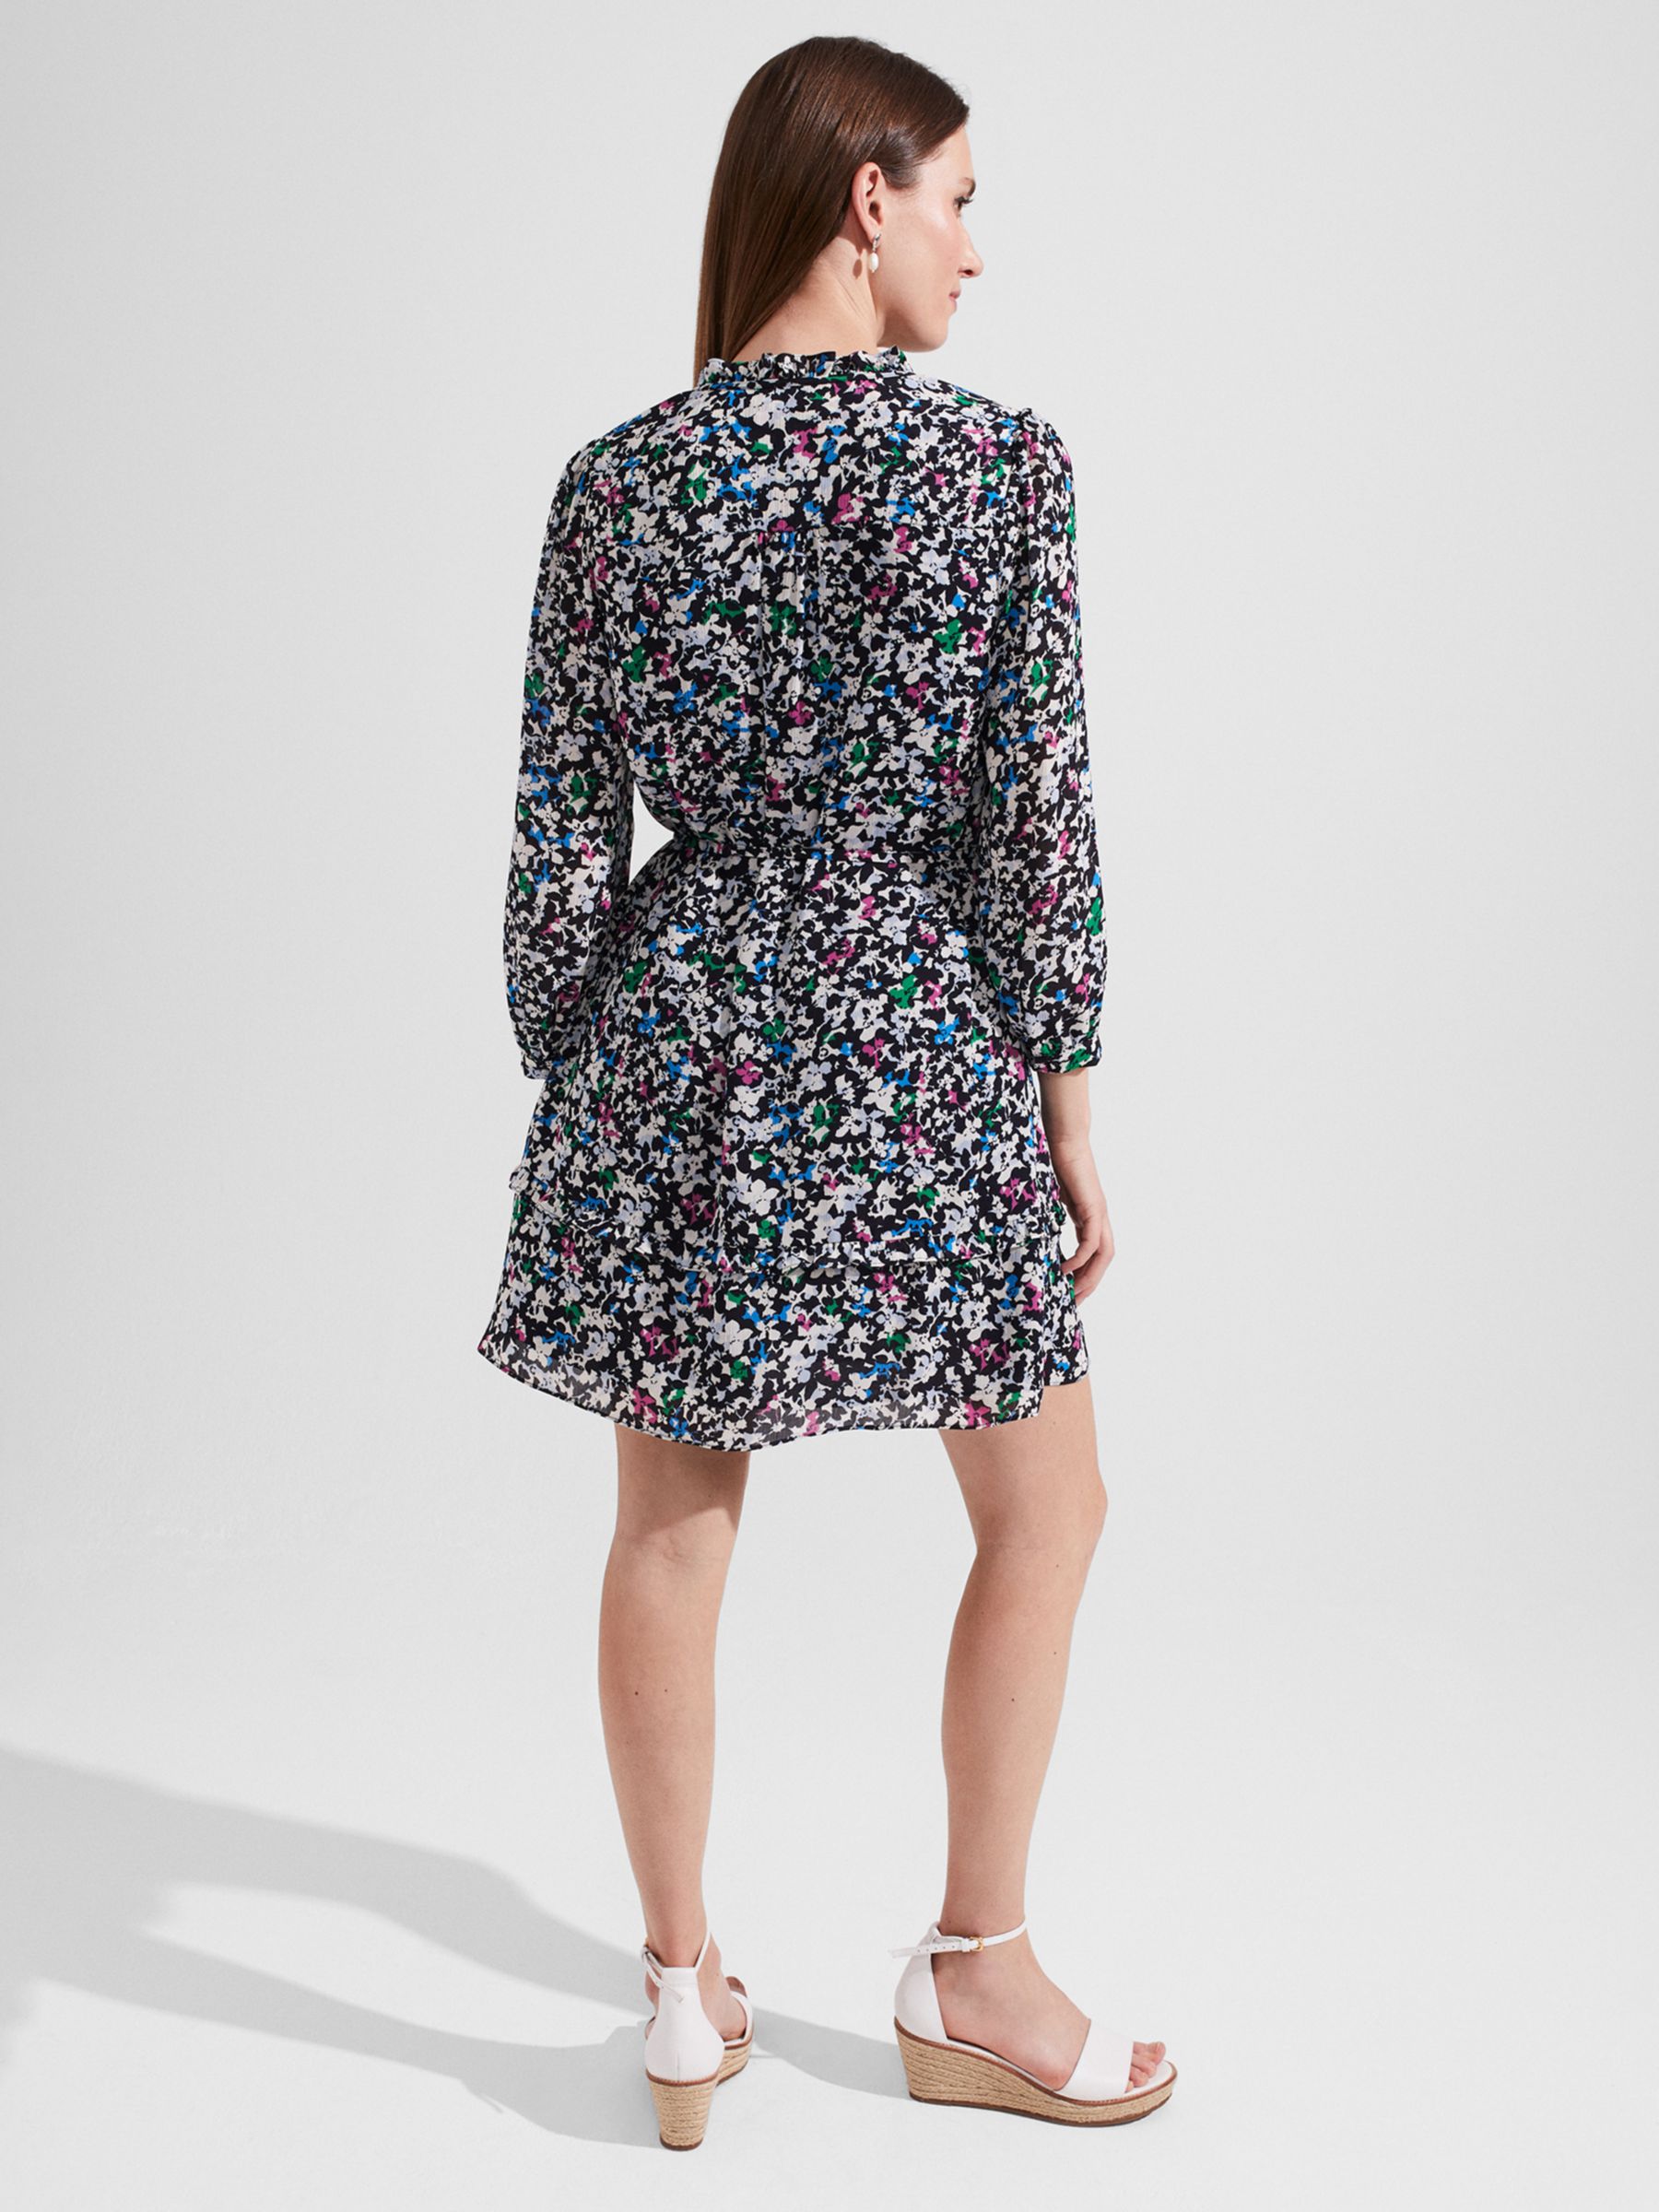 Hobbs Selina Abstract Print Mini Dress, Navy/Multi at John Lewis & Partners